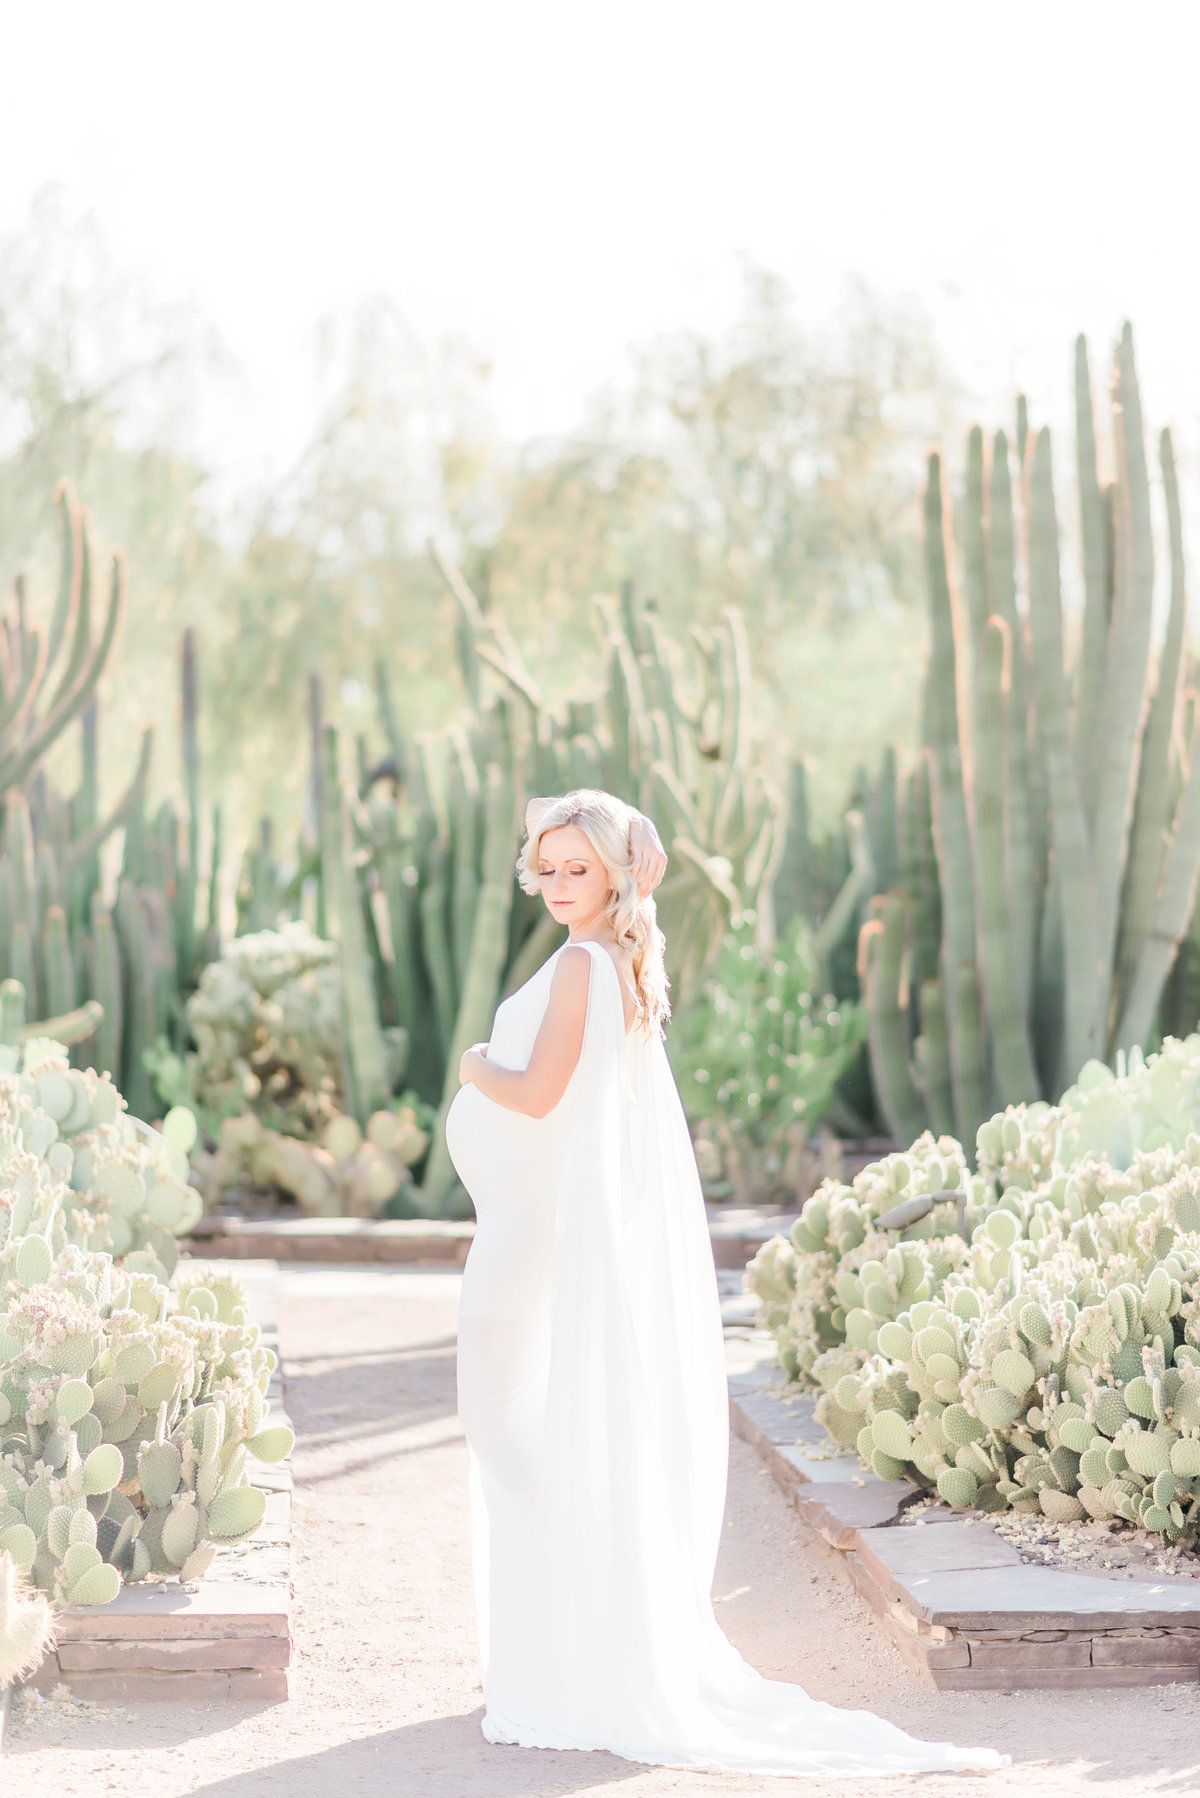 Dorota's-Maternity-Session-Phoenix-Arizona-Ashley-Flug-Photography03